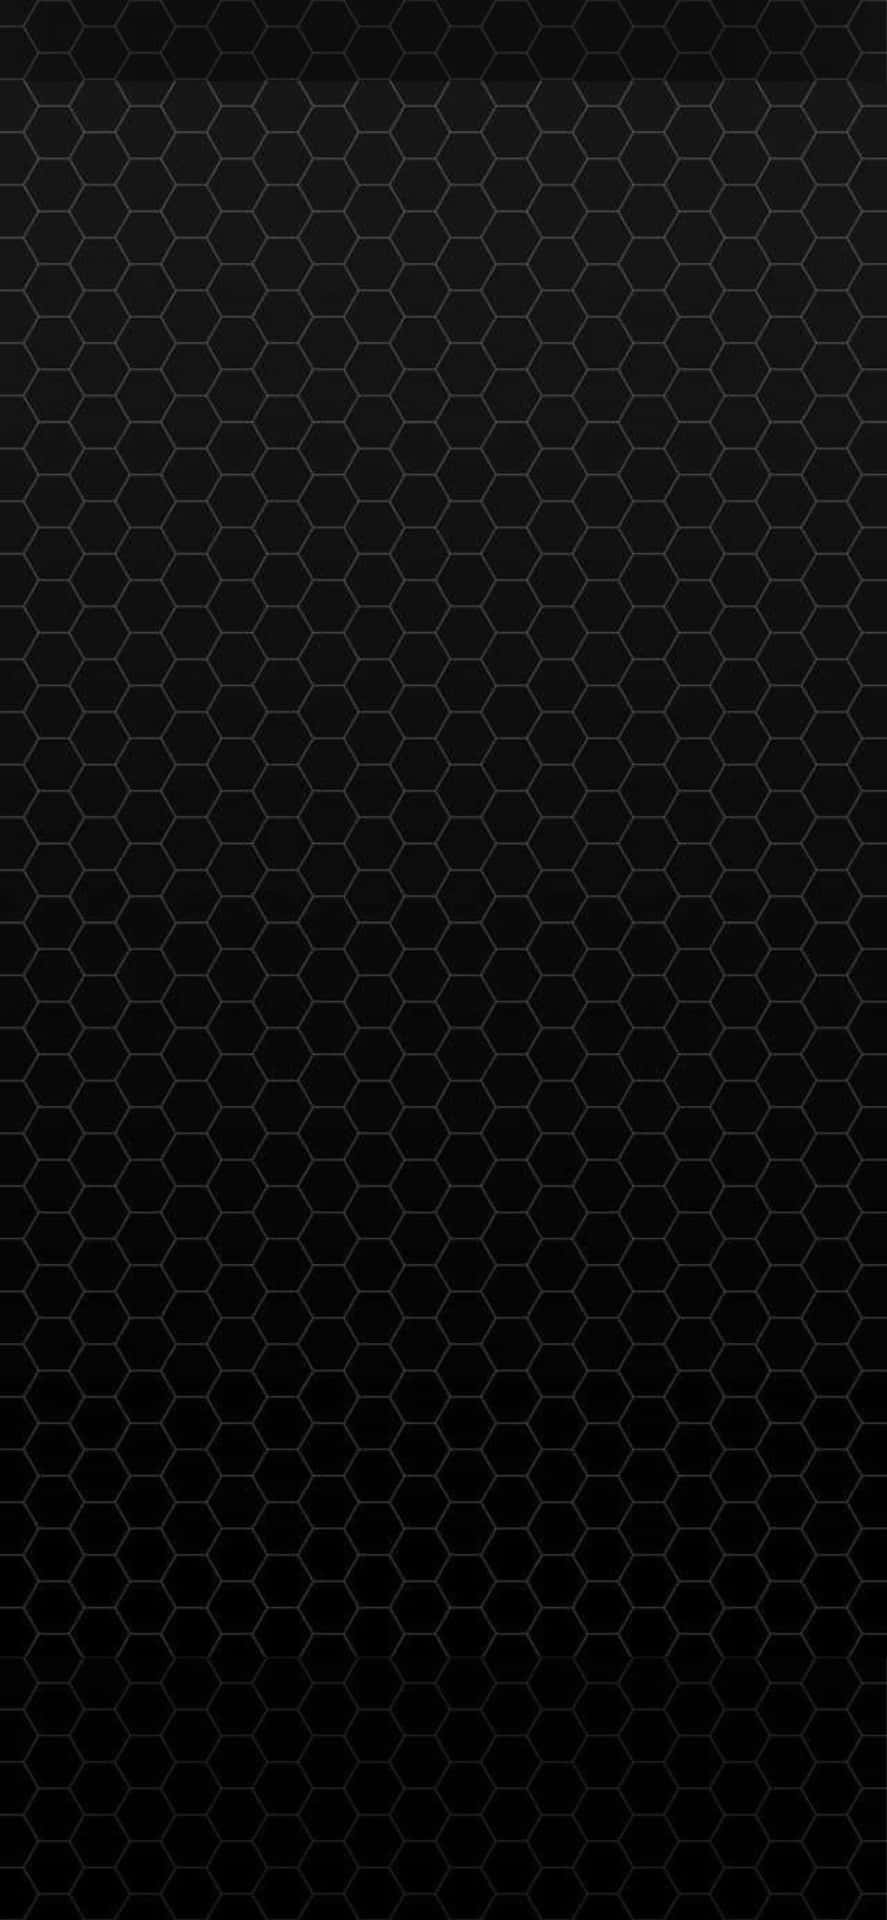 A Black Hexagonal Pattern On A Black Background